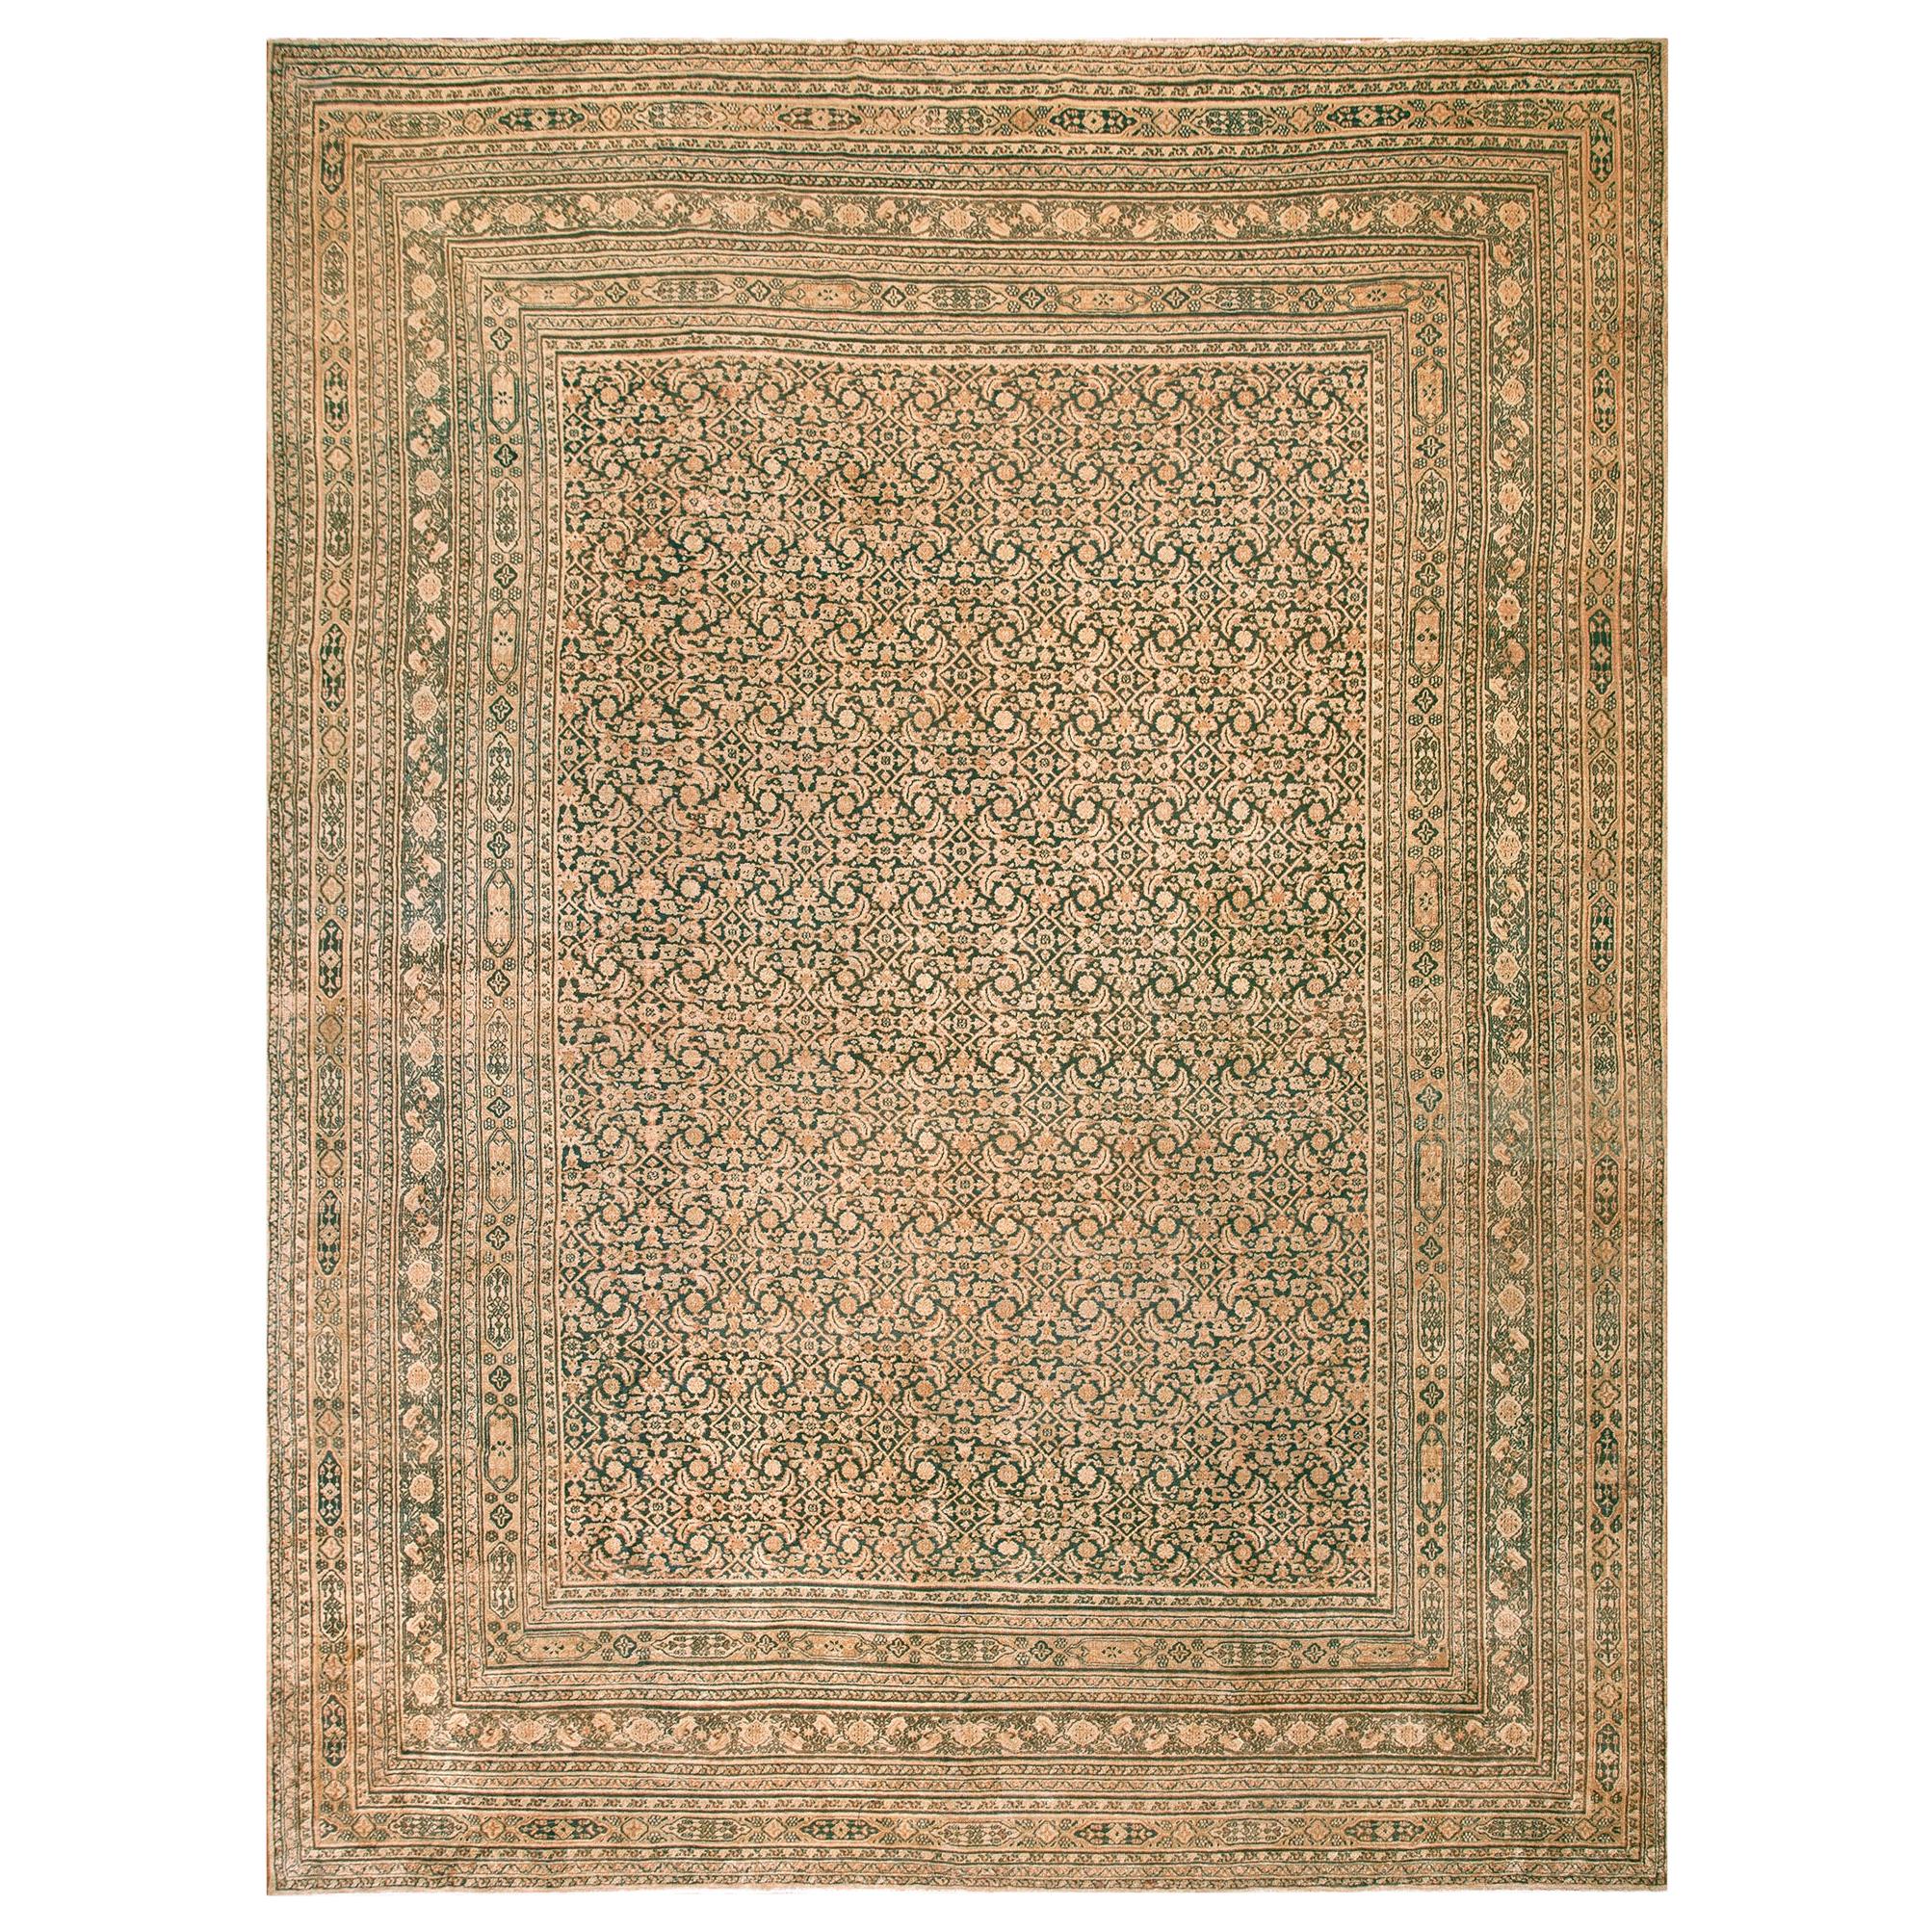 19th Century N.E. Persian Khorassan Moud Carpet ( 11'6" x 15'2" - 352 x 462 ) For Sale